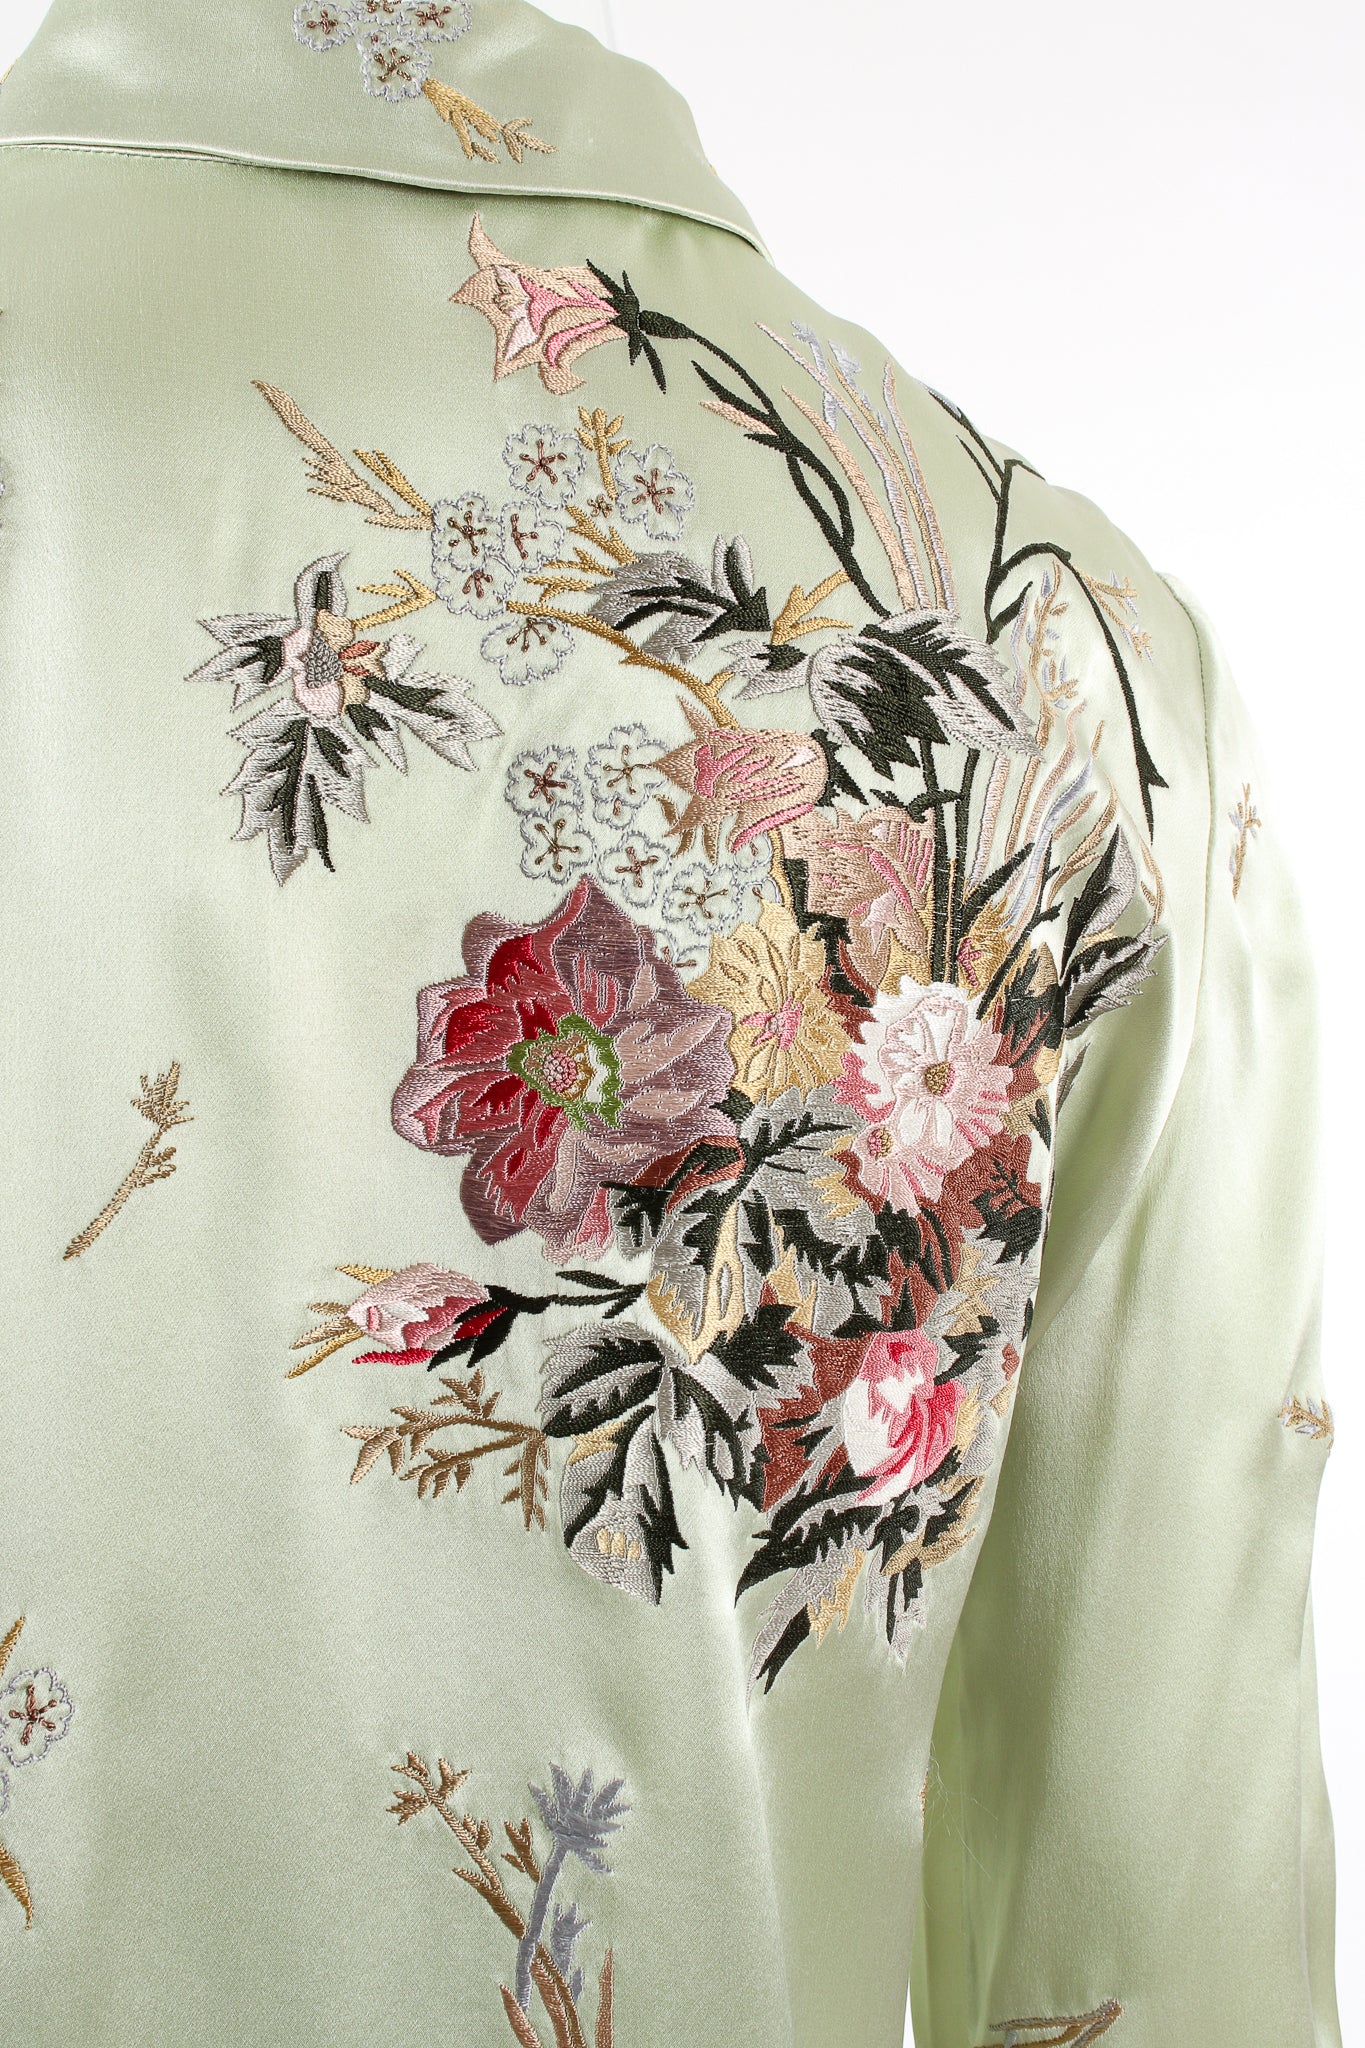 Vintage Oscar de la Renta Mint Floral Embroidered Silk Shirt on Mannequin detail at Recess LA